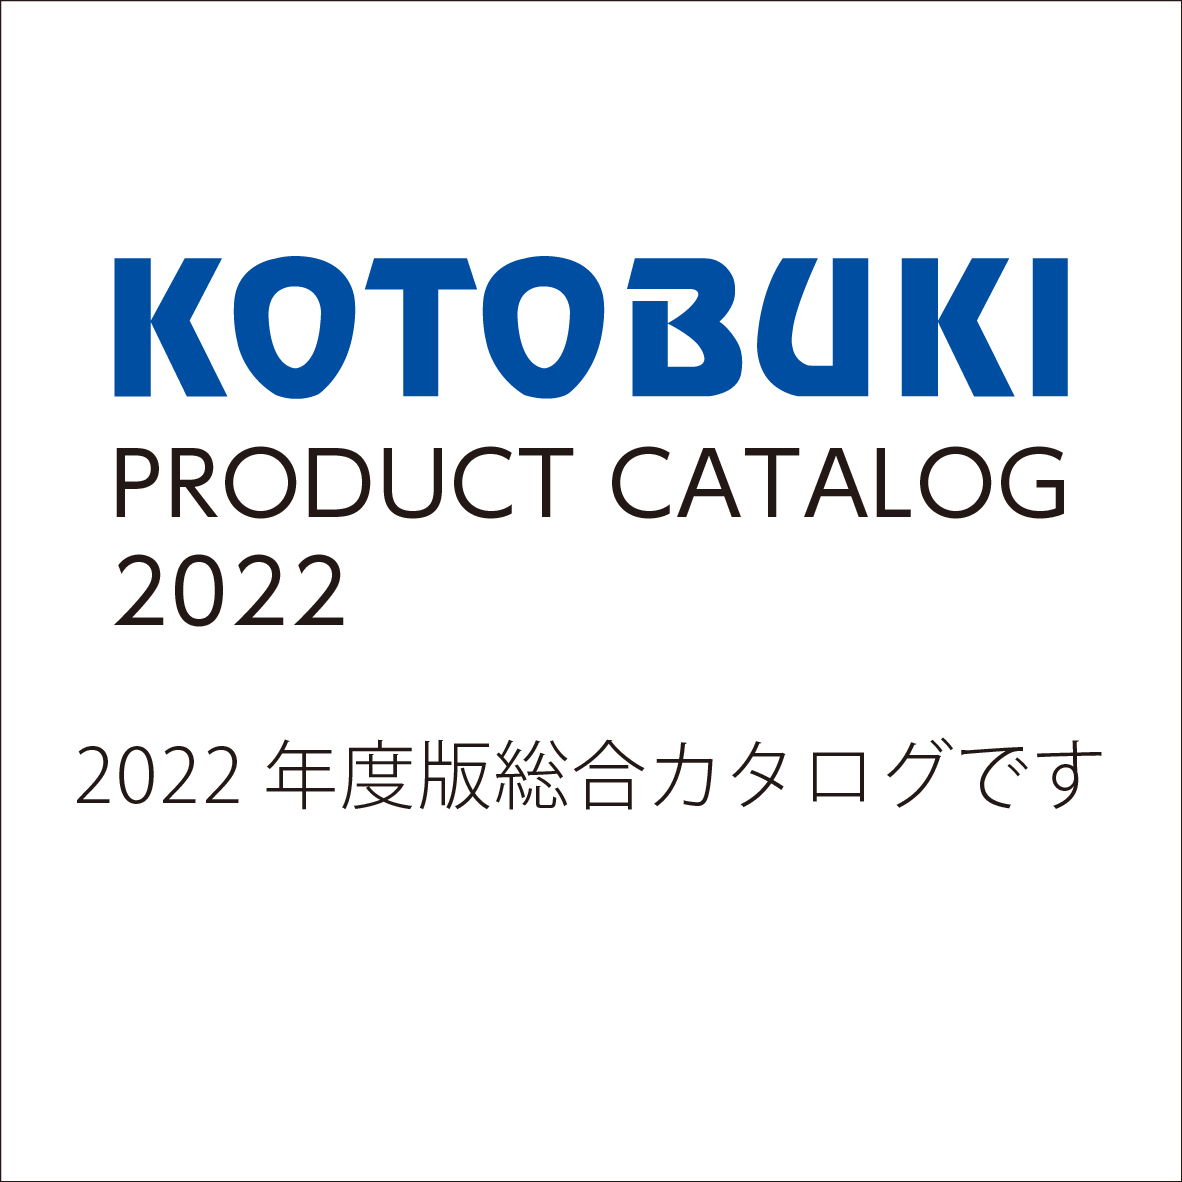 Kotobuki Kogei Co., Ltd.